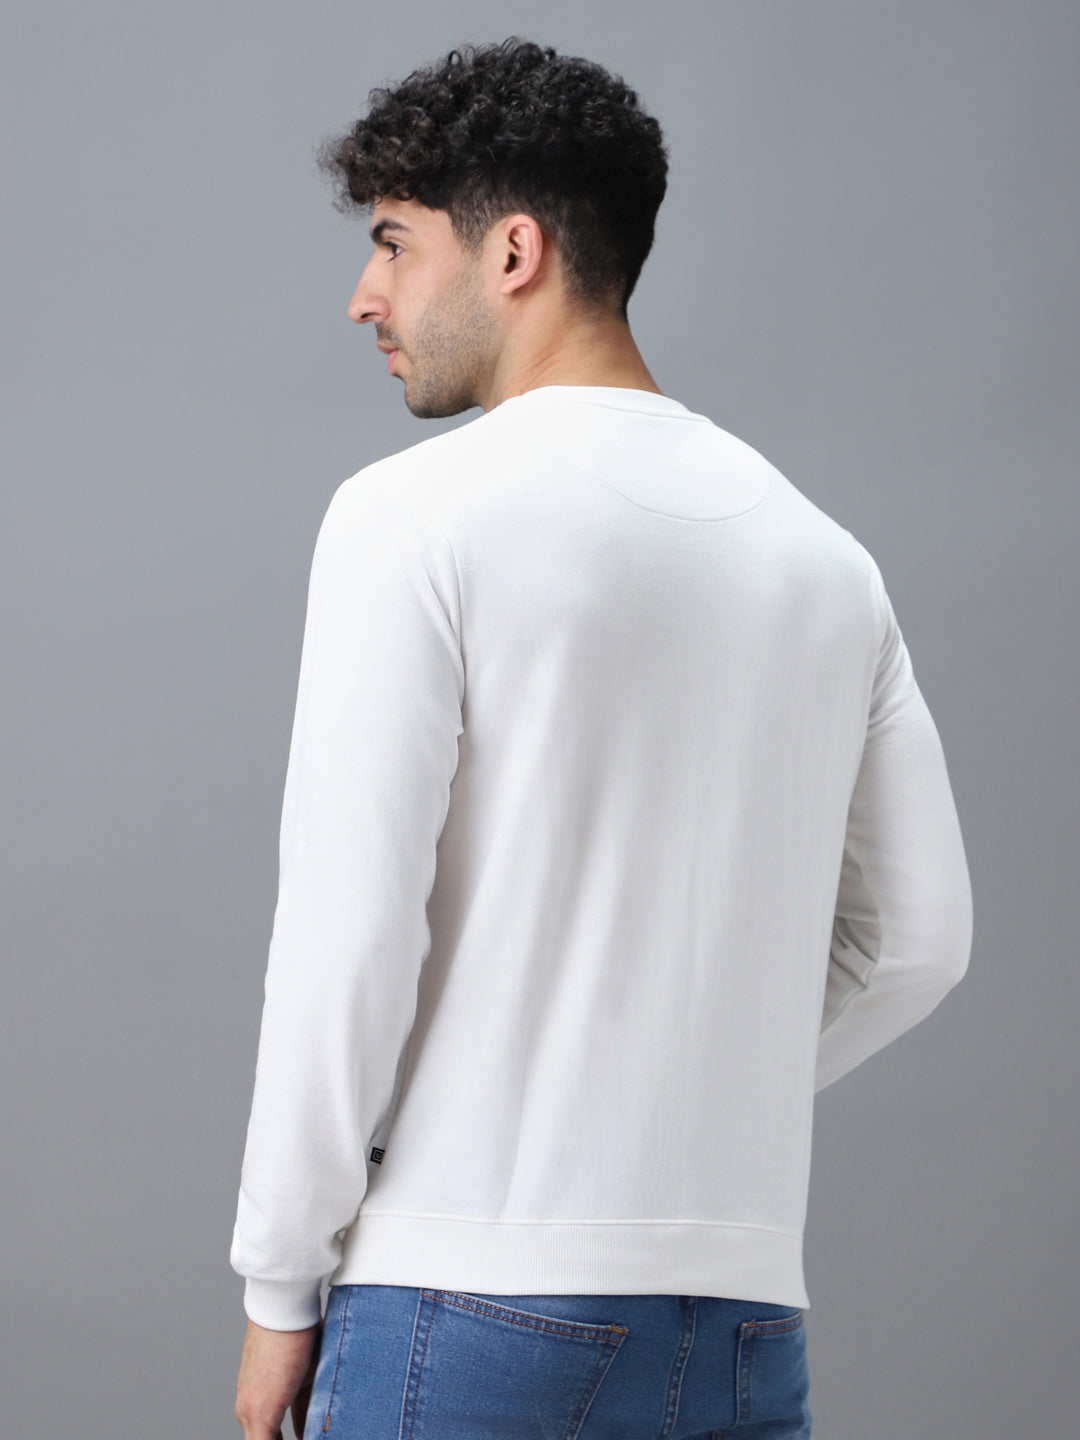 Urbano Fashion Men's White Cotton Graphic Print Round Neck Sweatshirt